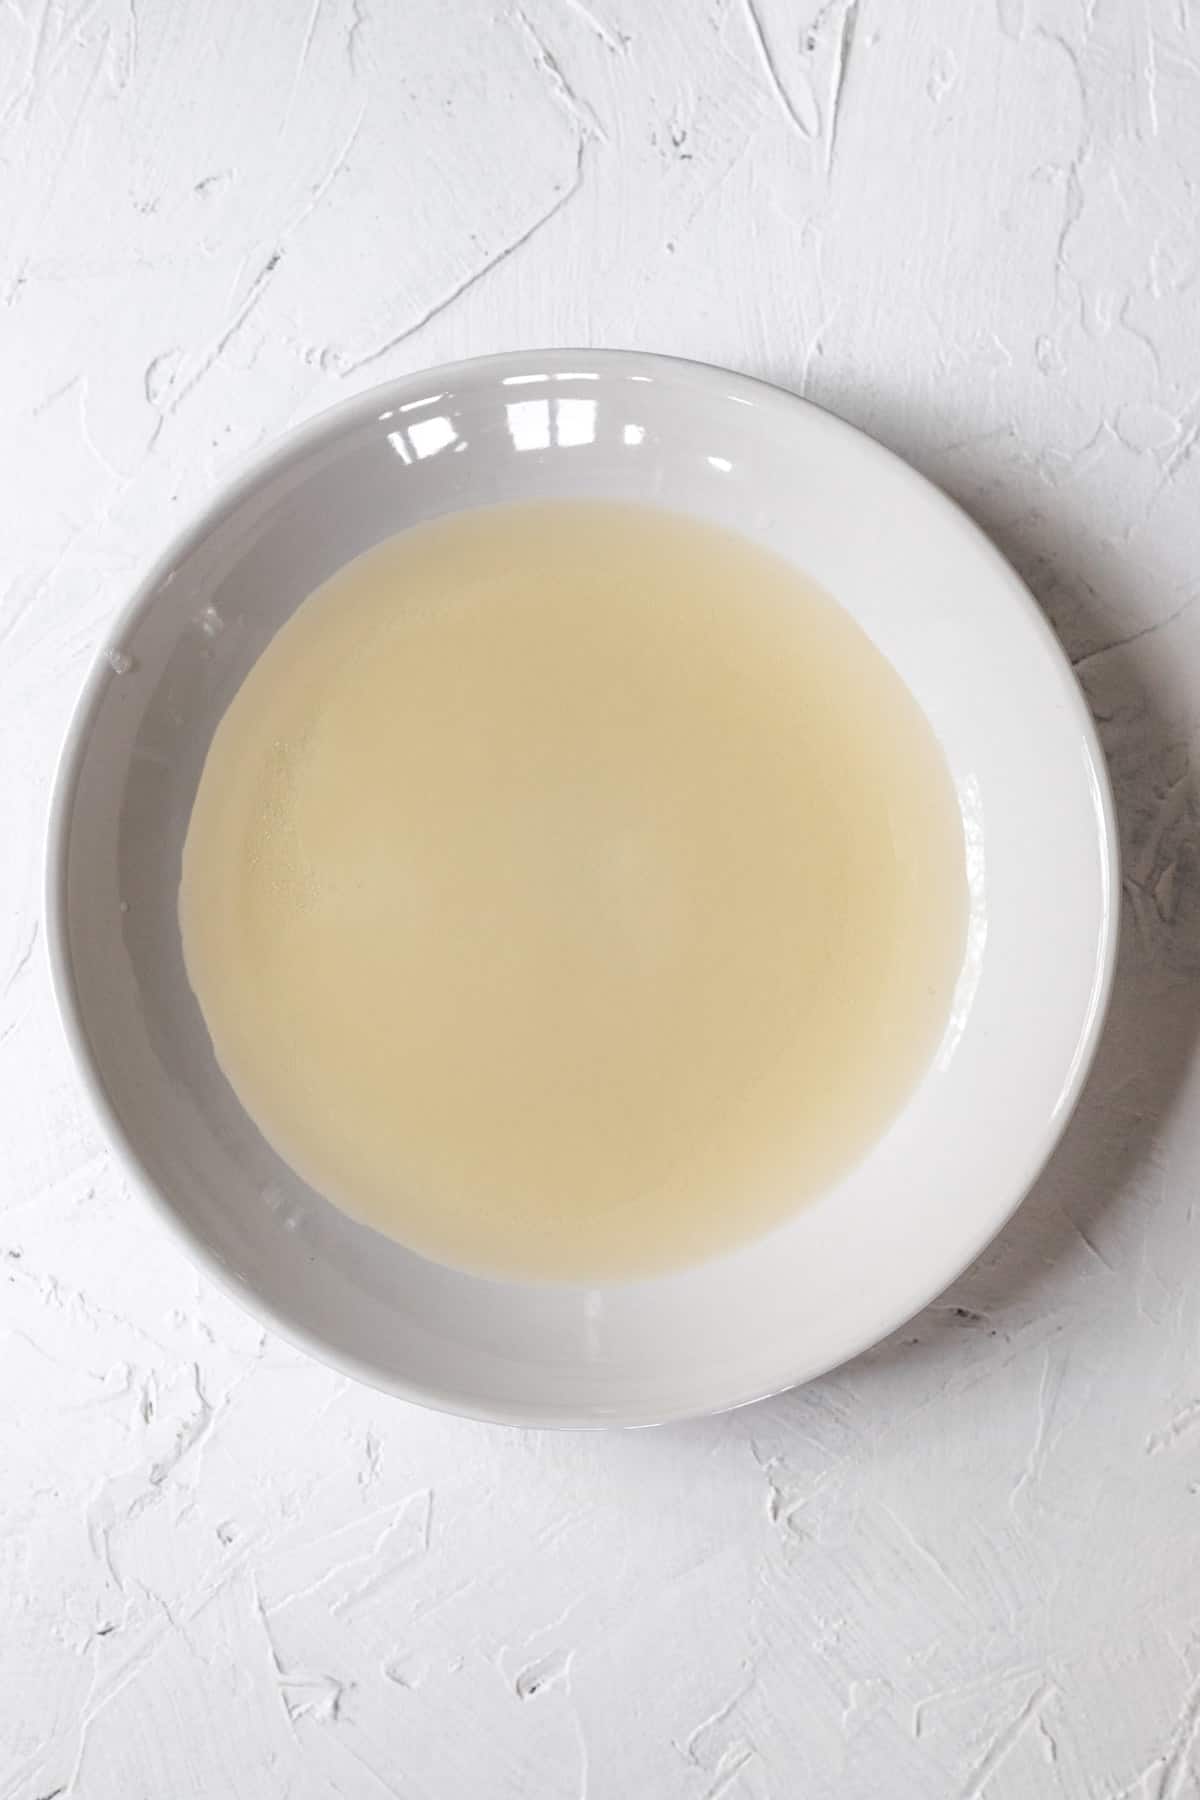 Rice vinegar, sugar, and salt in a microwaveable white bowl.